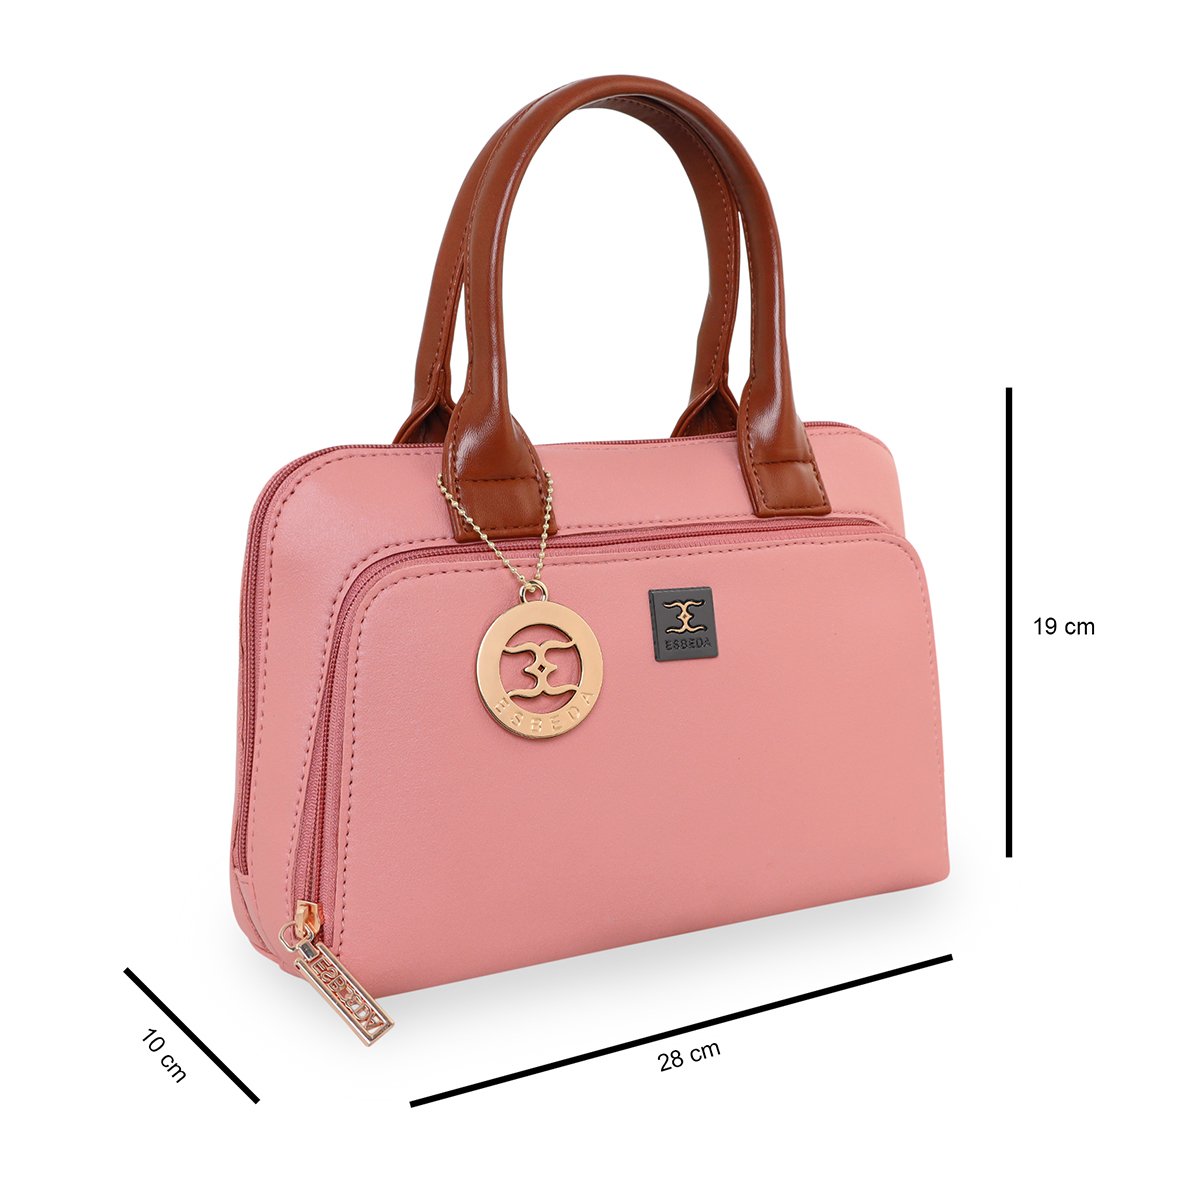 Lucite Clutch|elegant Gold Clutch Bag For Women - Pu Leather Evening Handbag  With Metal Lock